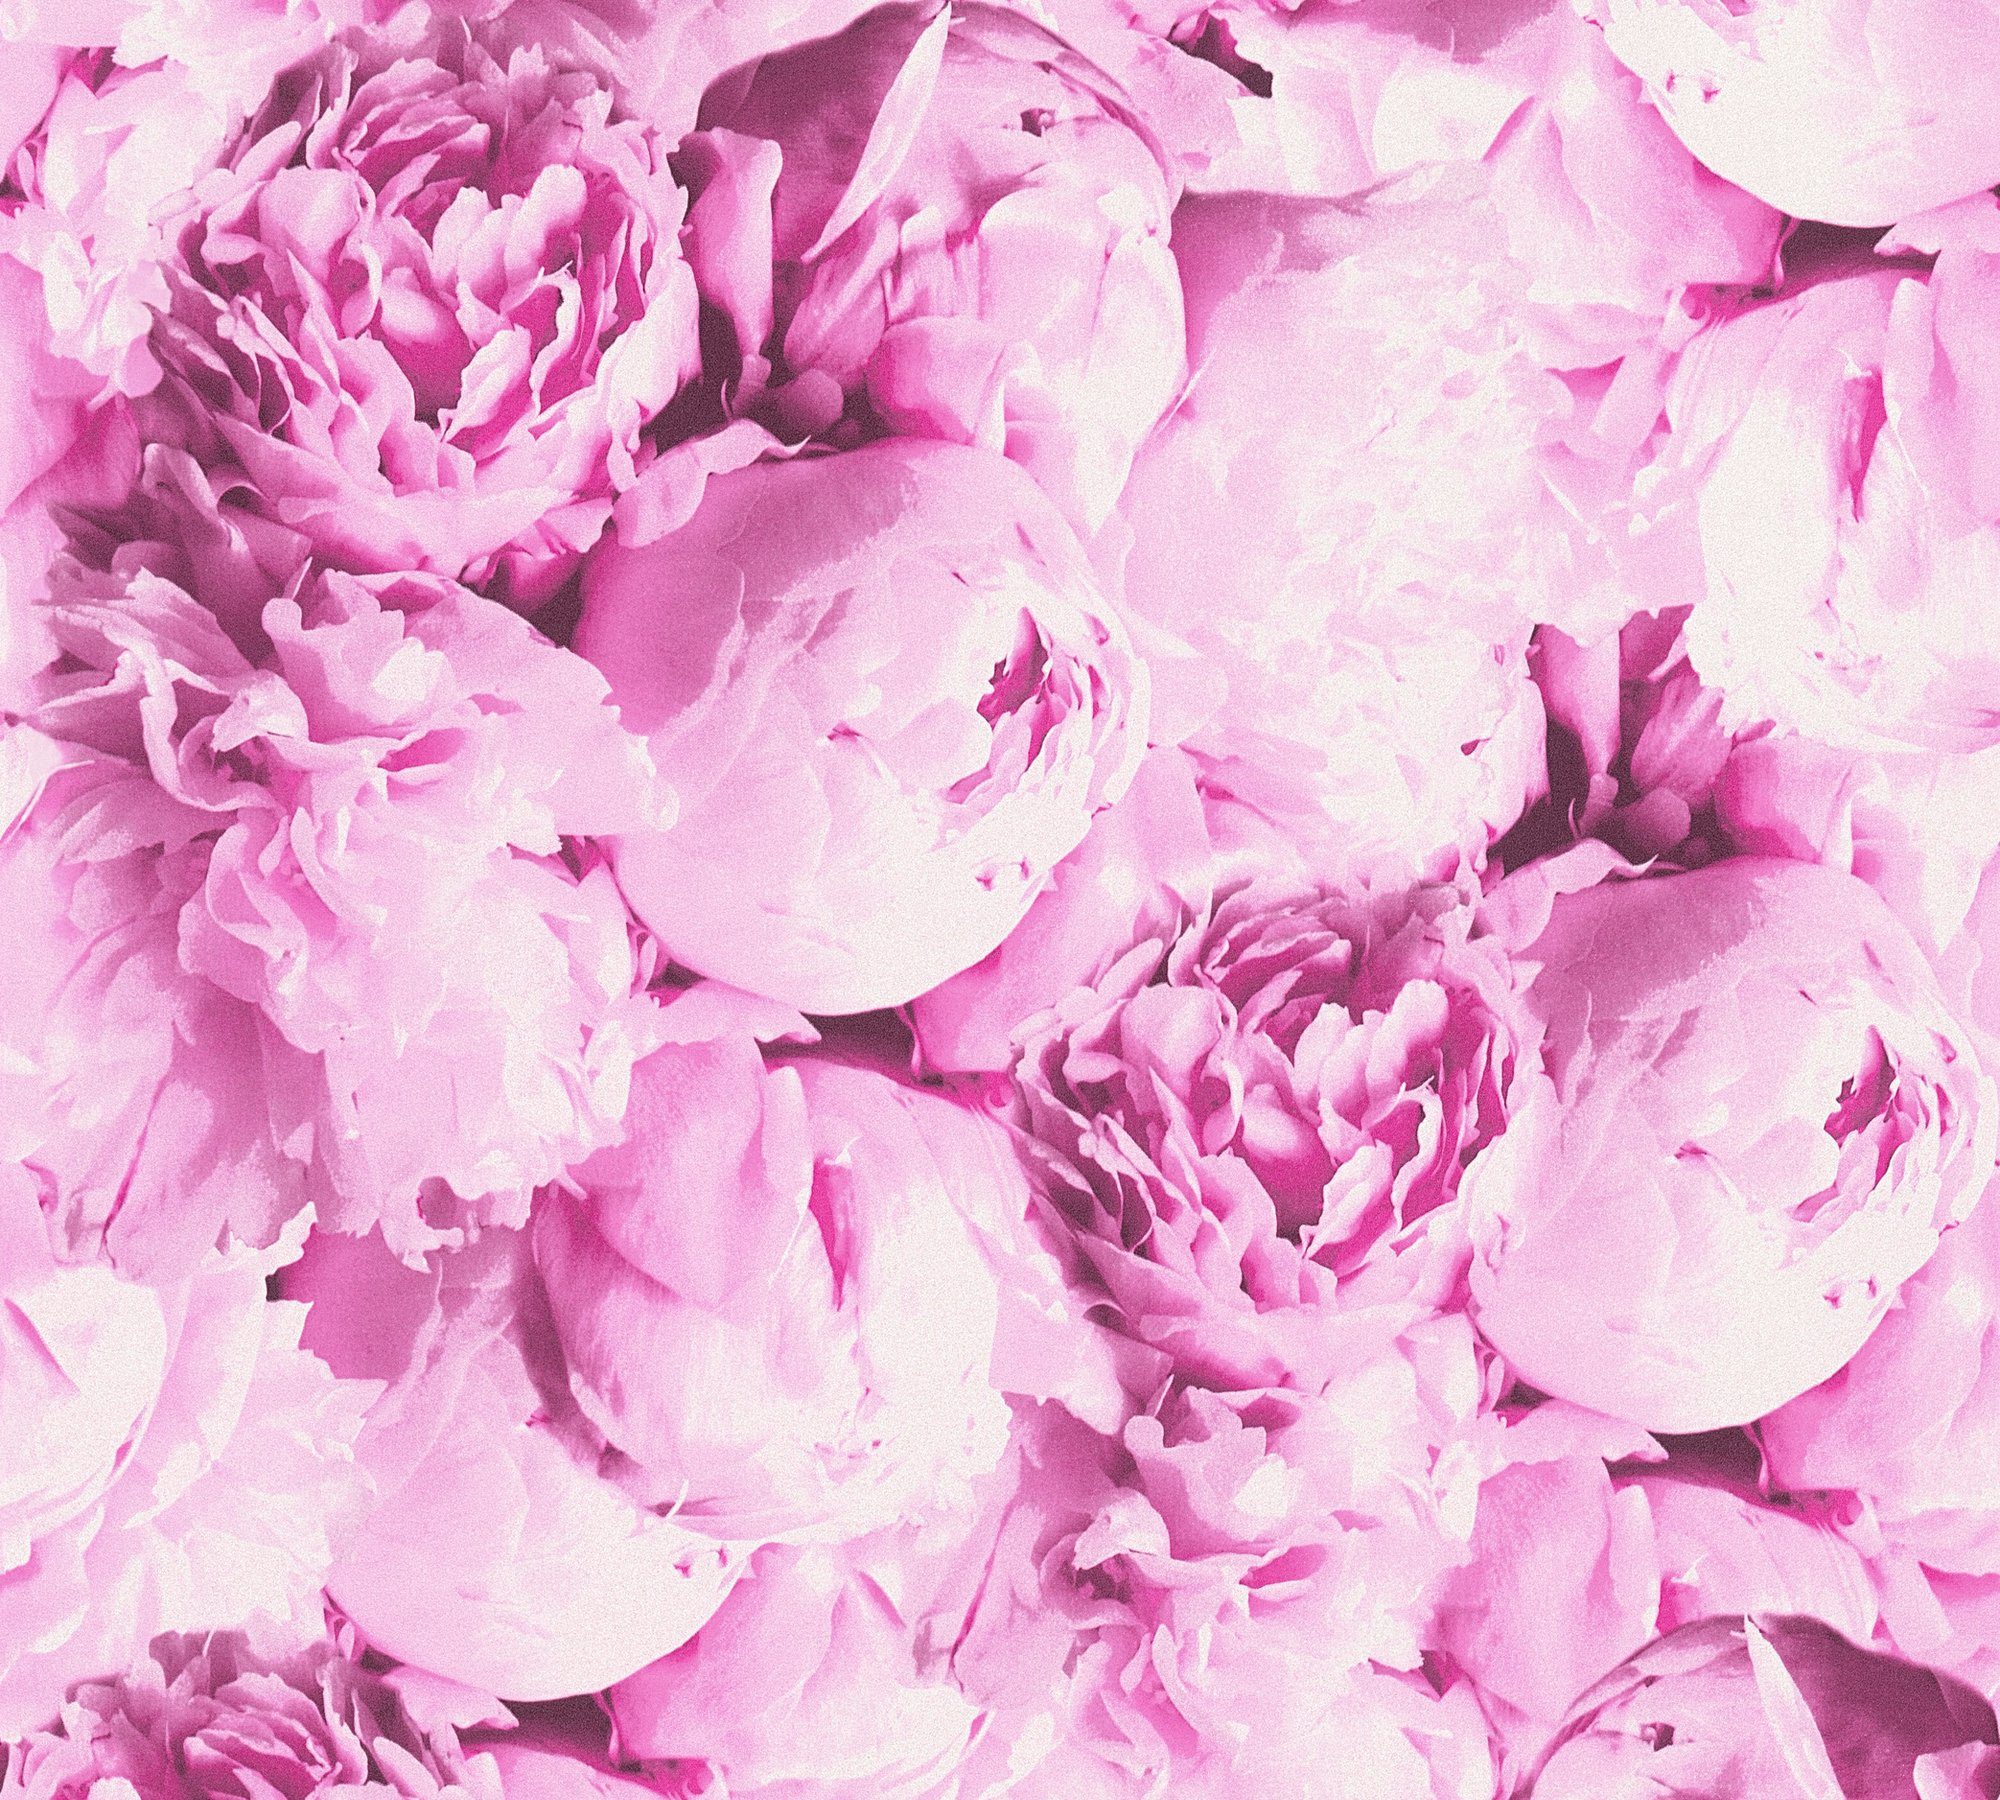 Blumen 2.0 Création mit floral, Bude A.S. Flowery Neue Vliestapete Tapete rosa/pink romantischen Rosen, Romantic Floral